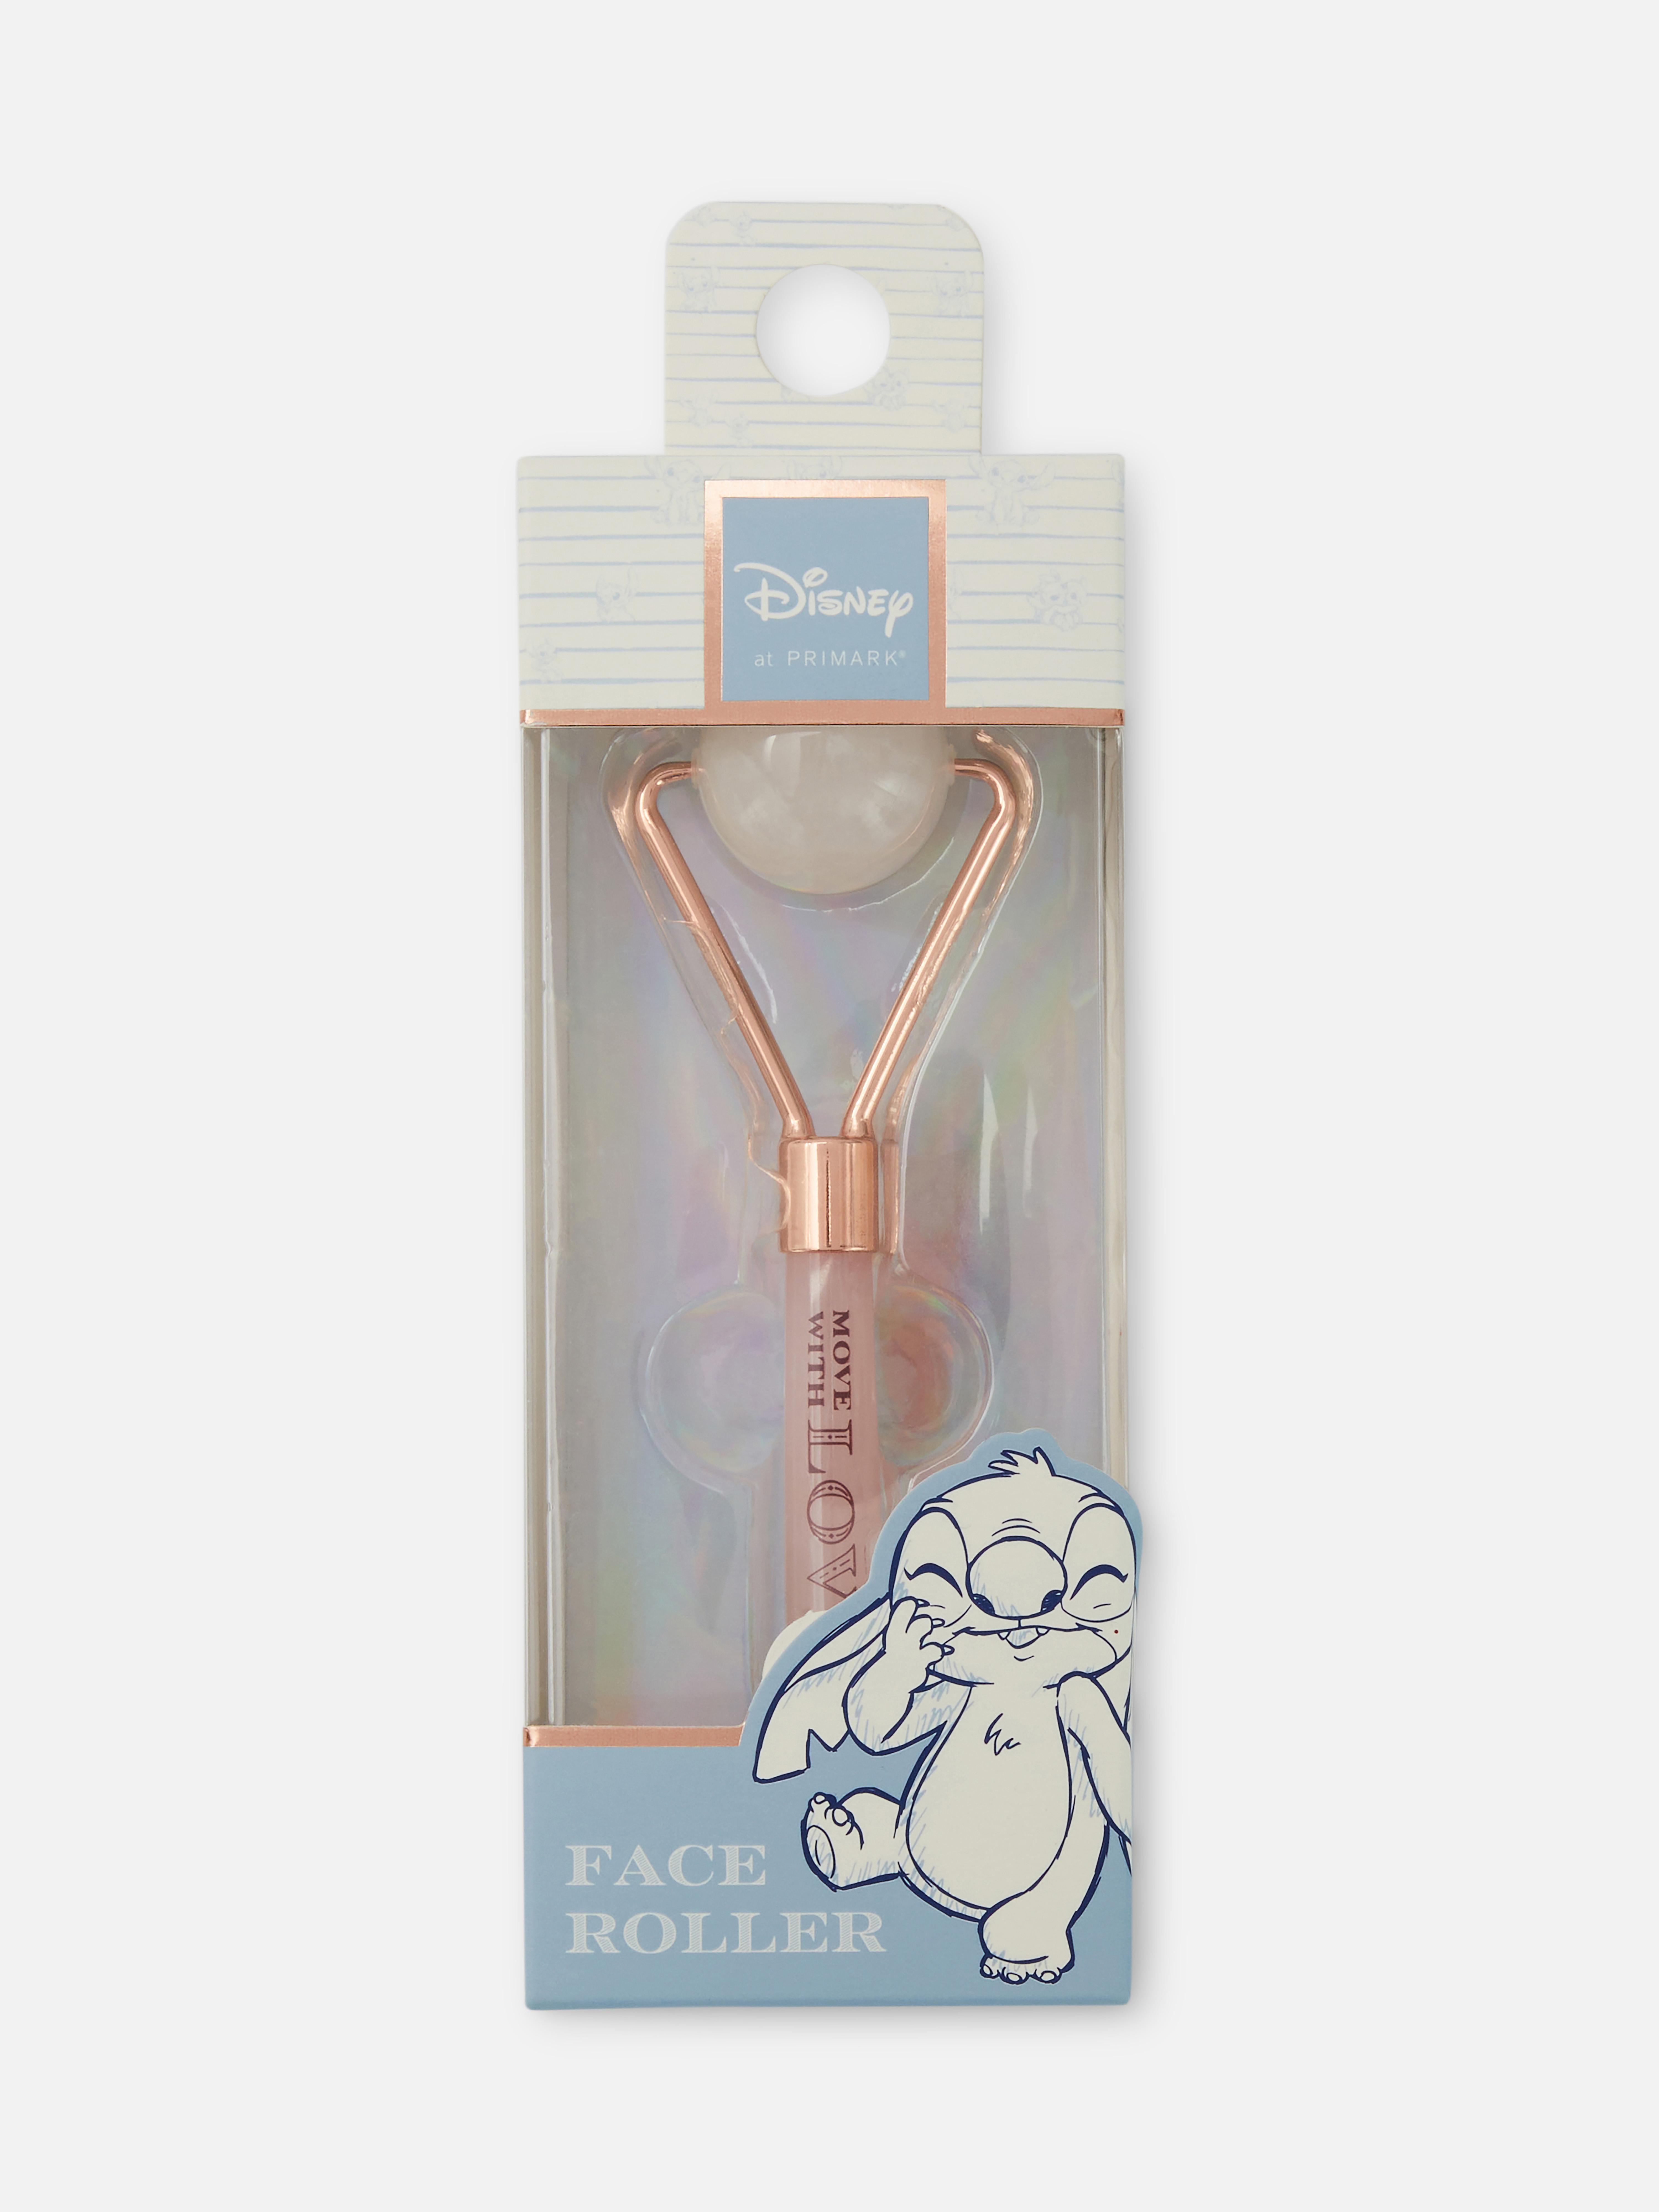 Disney's Lilo & Stitch Facial Roller